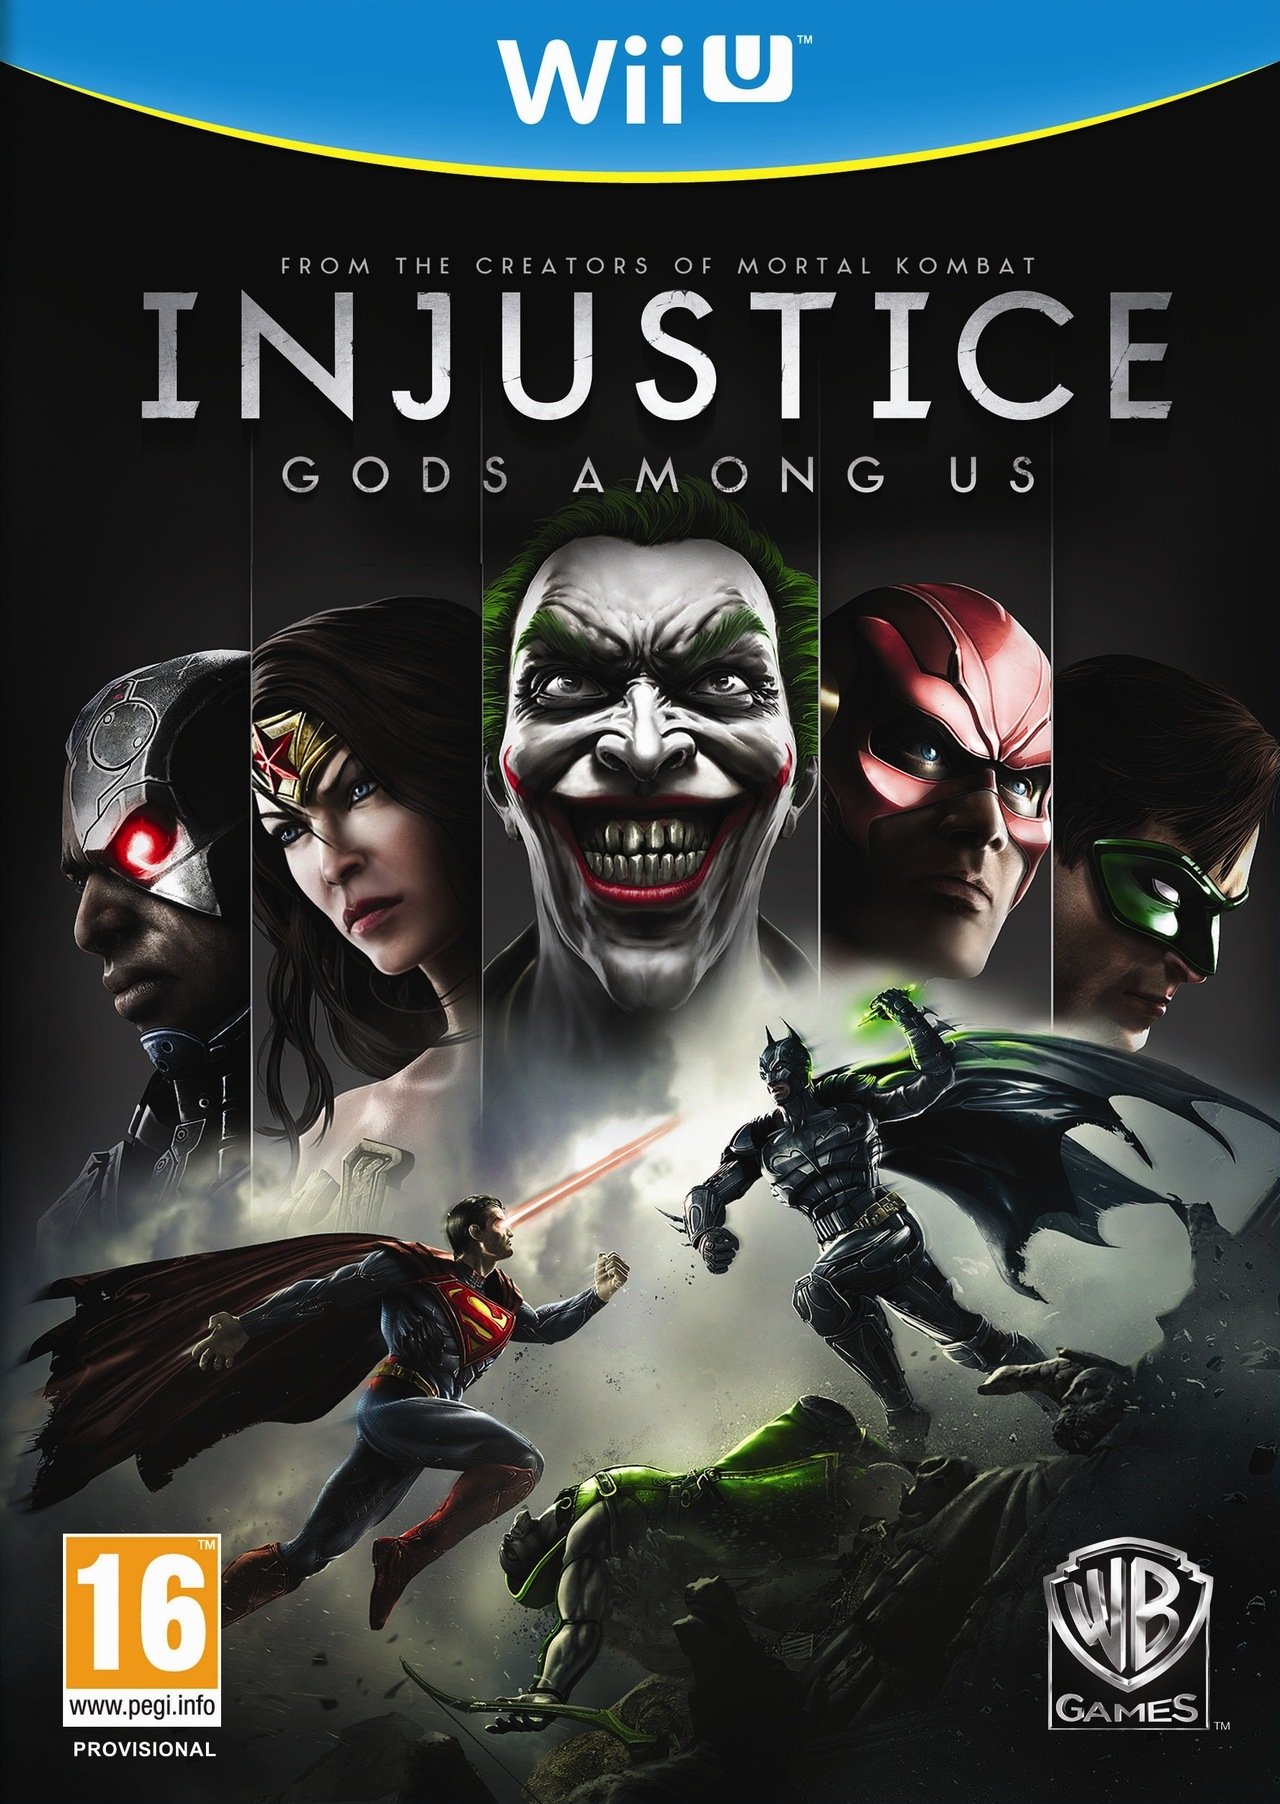 Caratula de Injustice Gods Among Us para Wii U